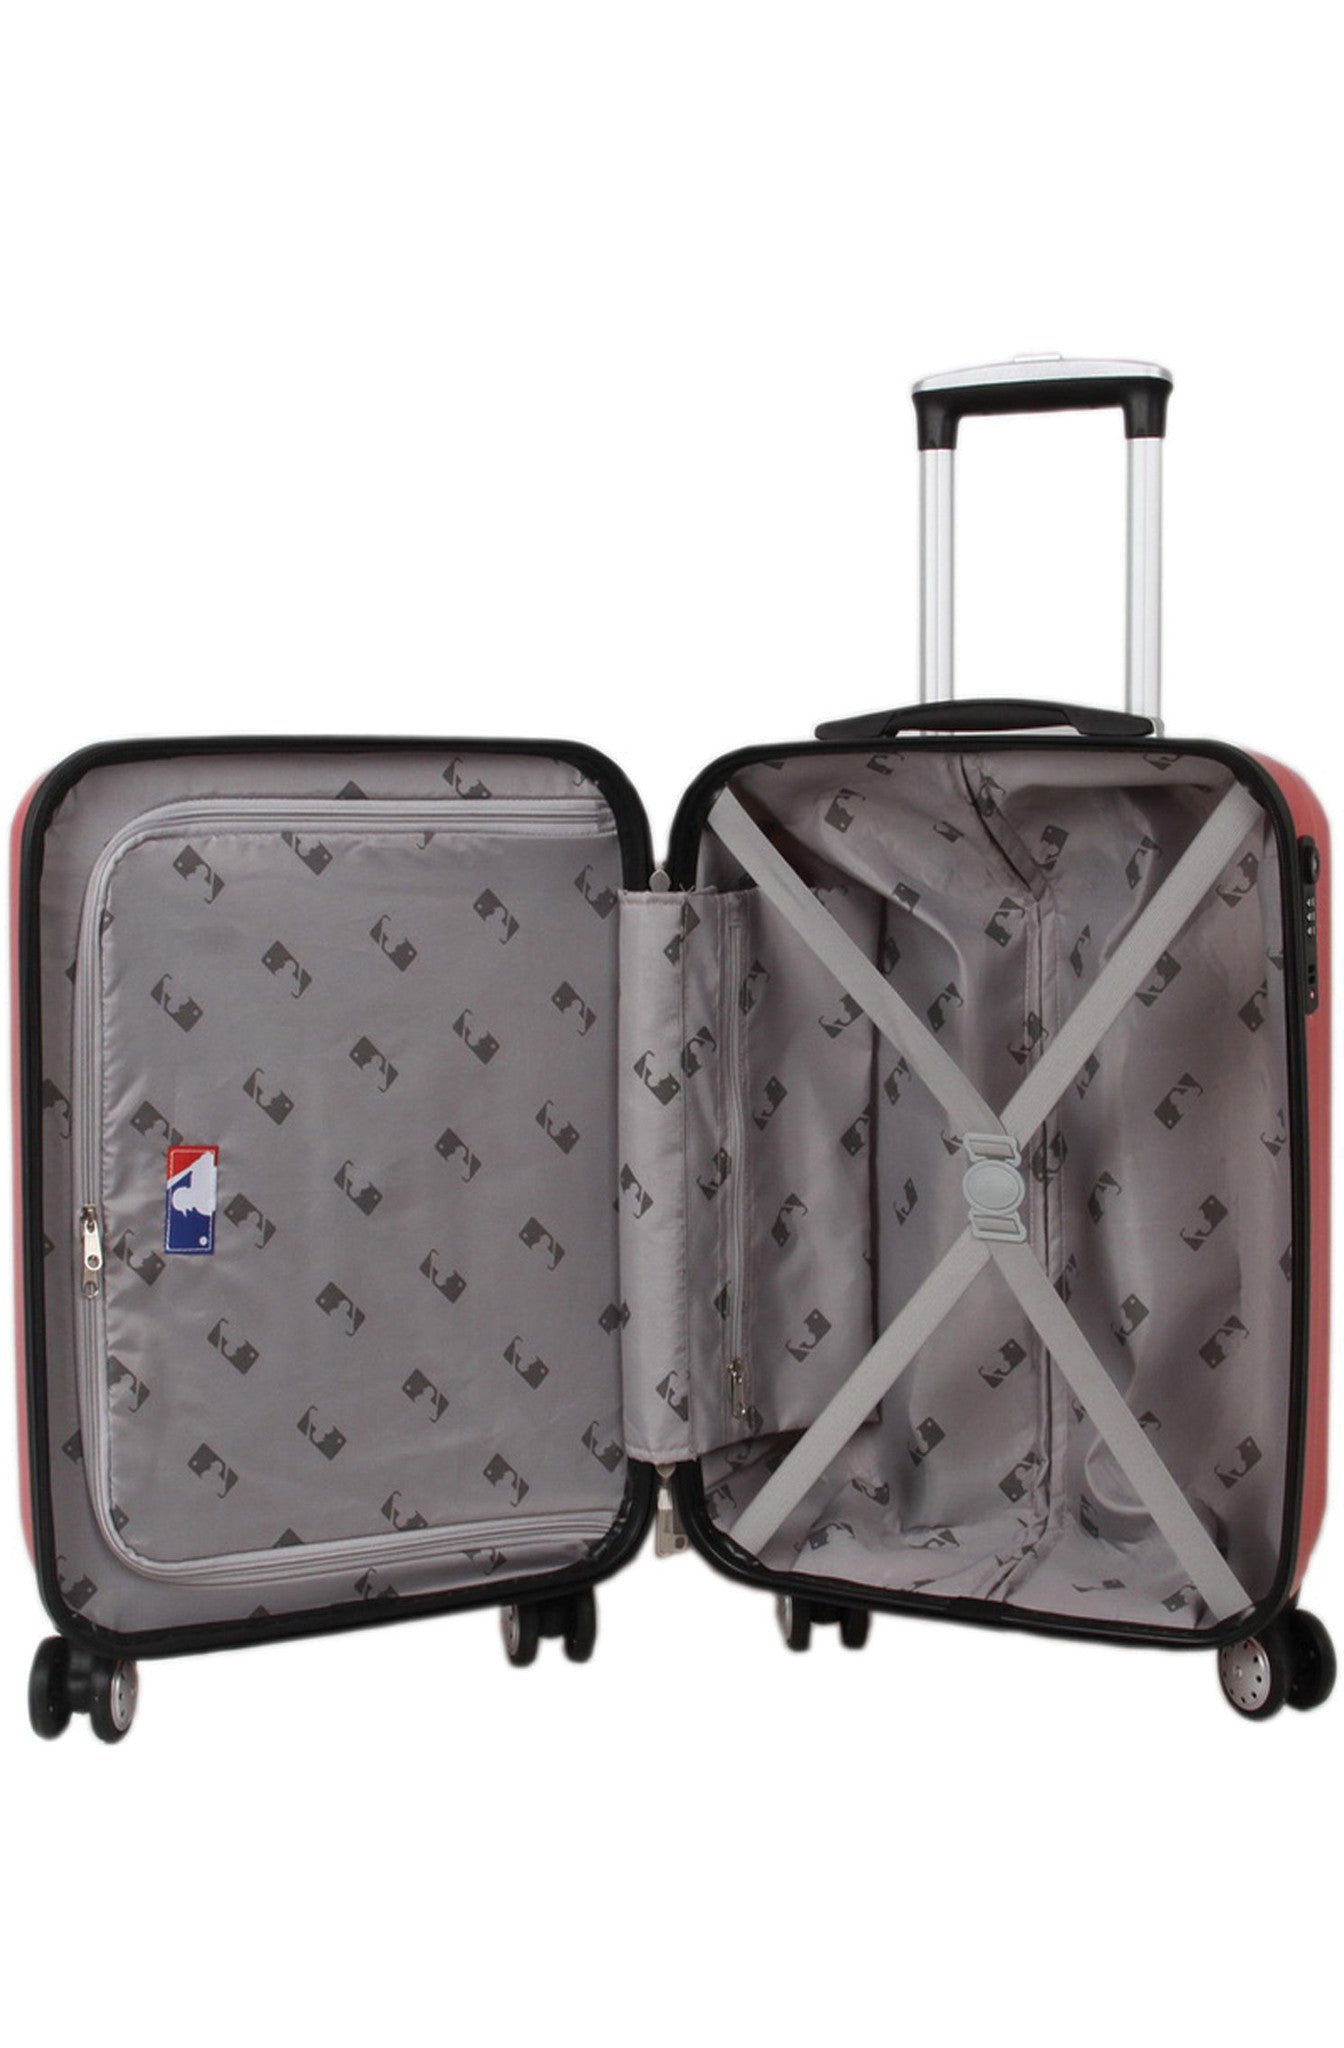 San Francisco Giants, 19" Premium Molded Luggage by Kaybull #SF-19PCF - OBM Distribution, Inc.